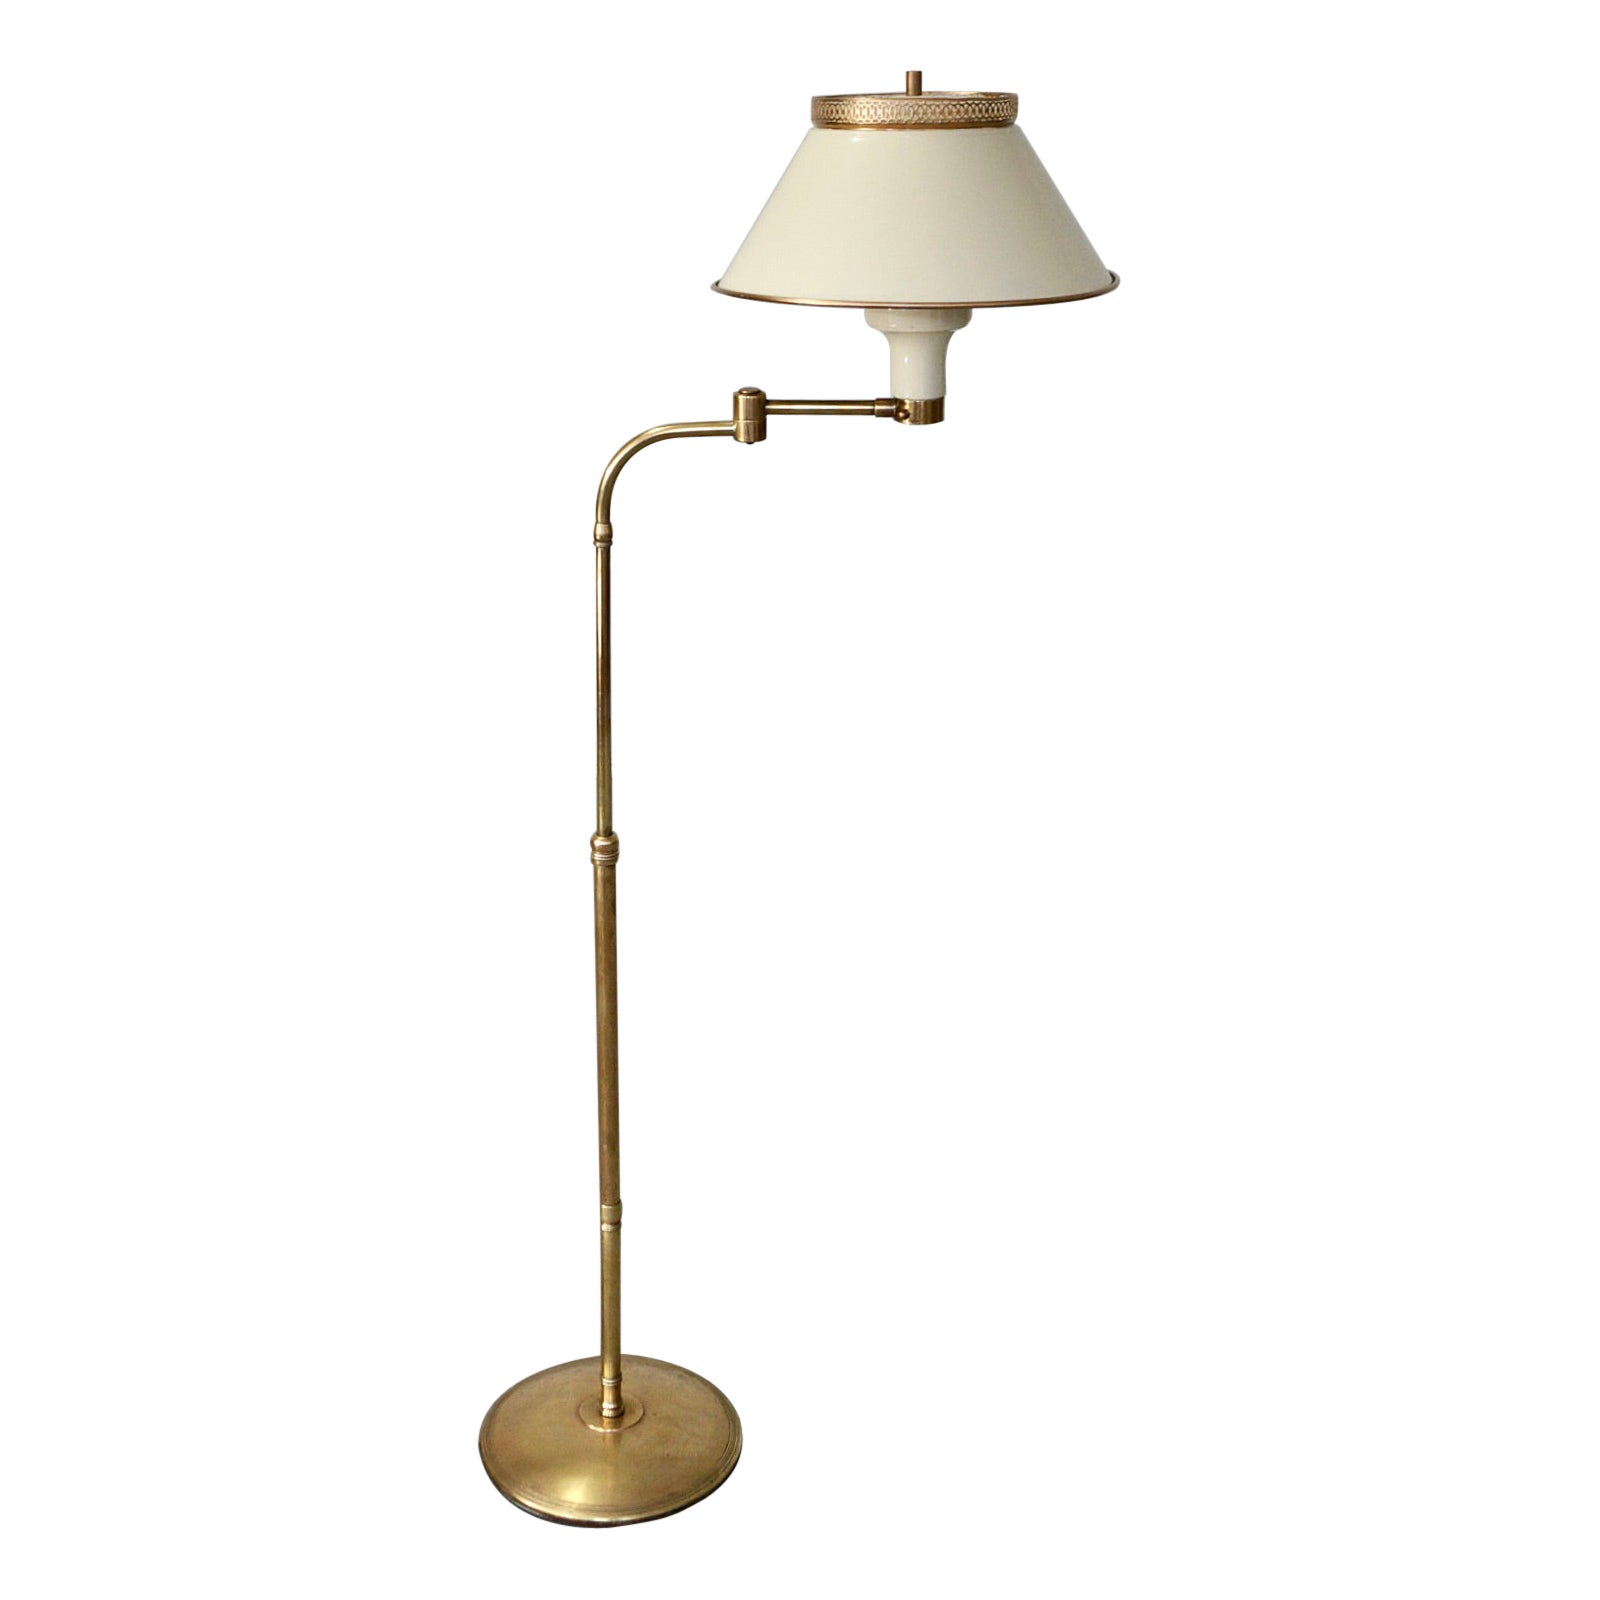 1940's Hollywood Regency Dorothy Draper Style Solid Brass Adjustable Floor Lamp For Sale